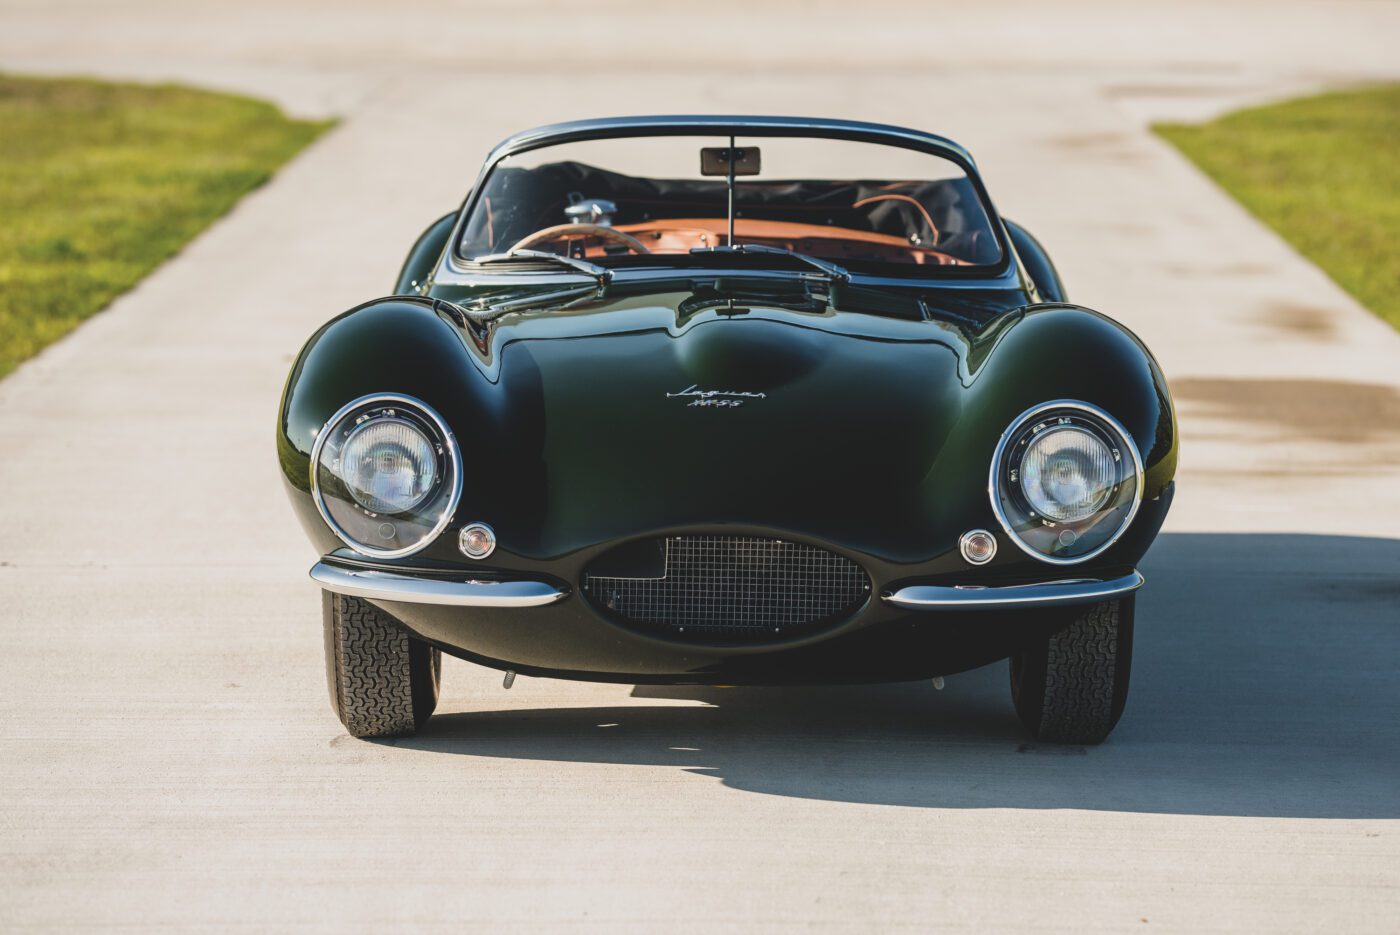 1957 Jaguar XK-SS - Amazing Classic Cars